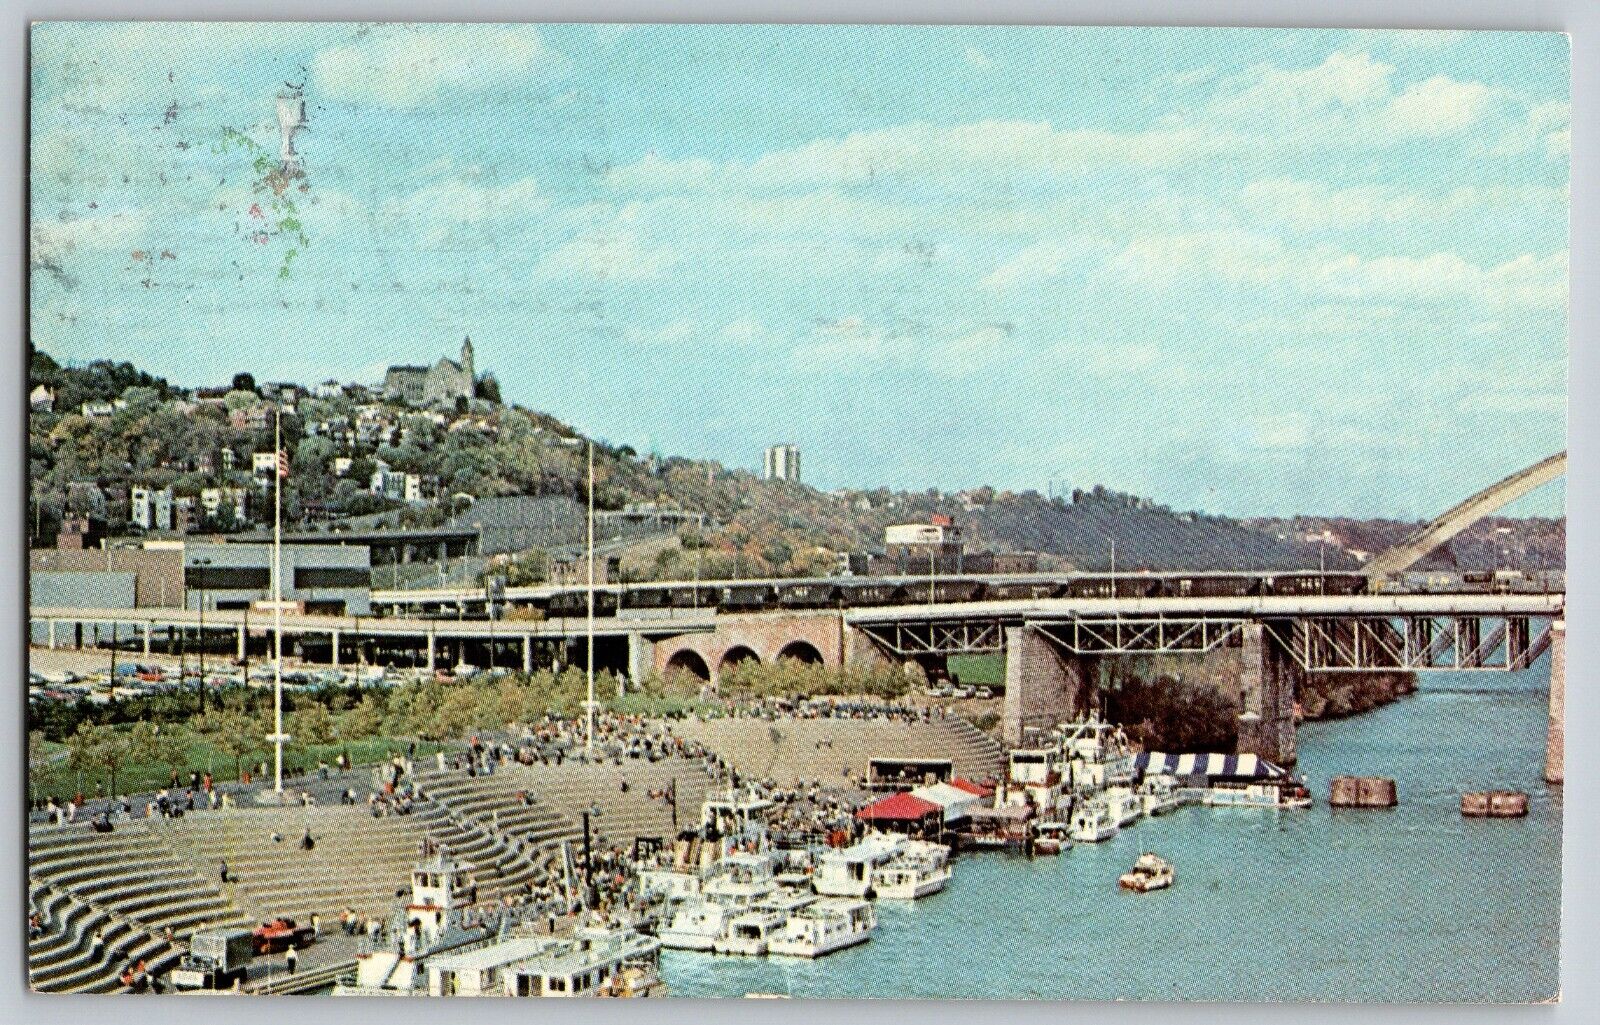 Cincinnati, Ohio - Serpentine Wall at the Riverfront - Vintage Postcard - Posted